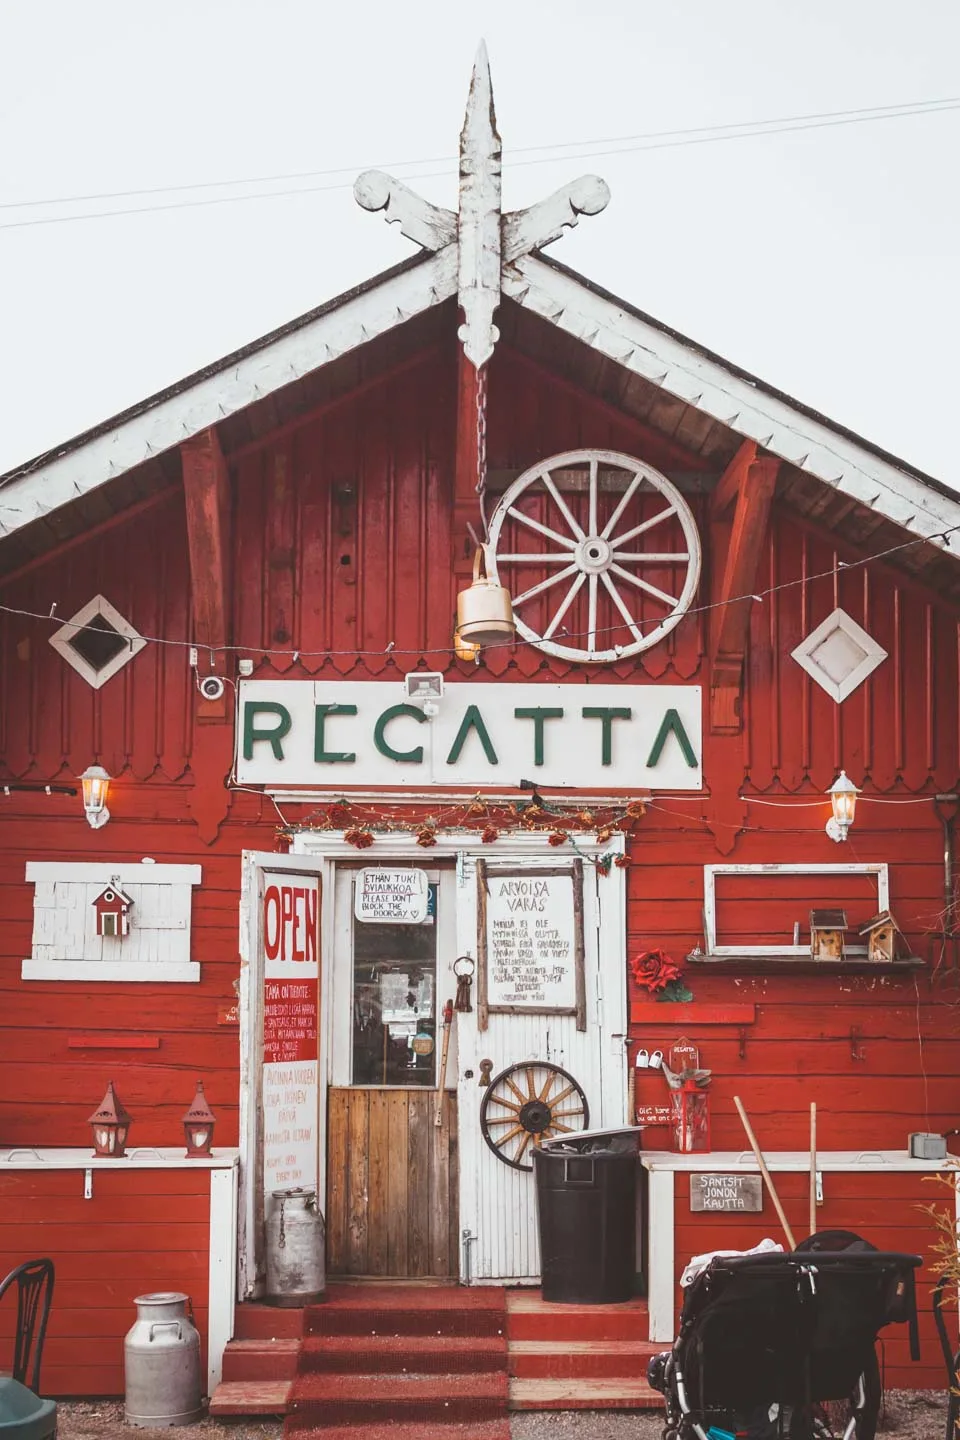 Regatta Cafe, Helsinki, Finland